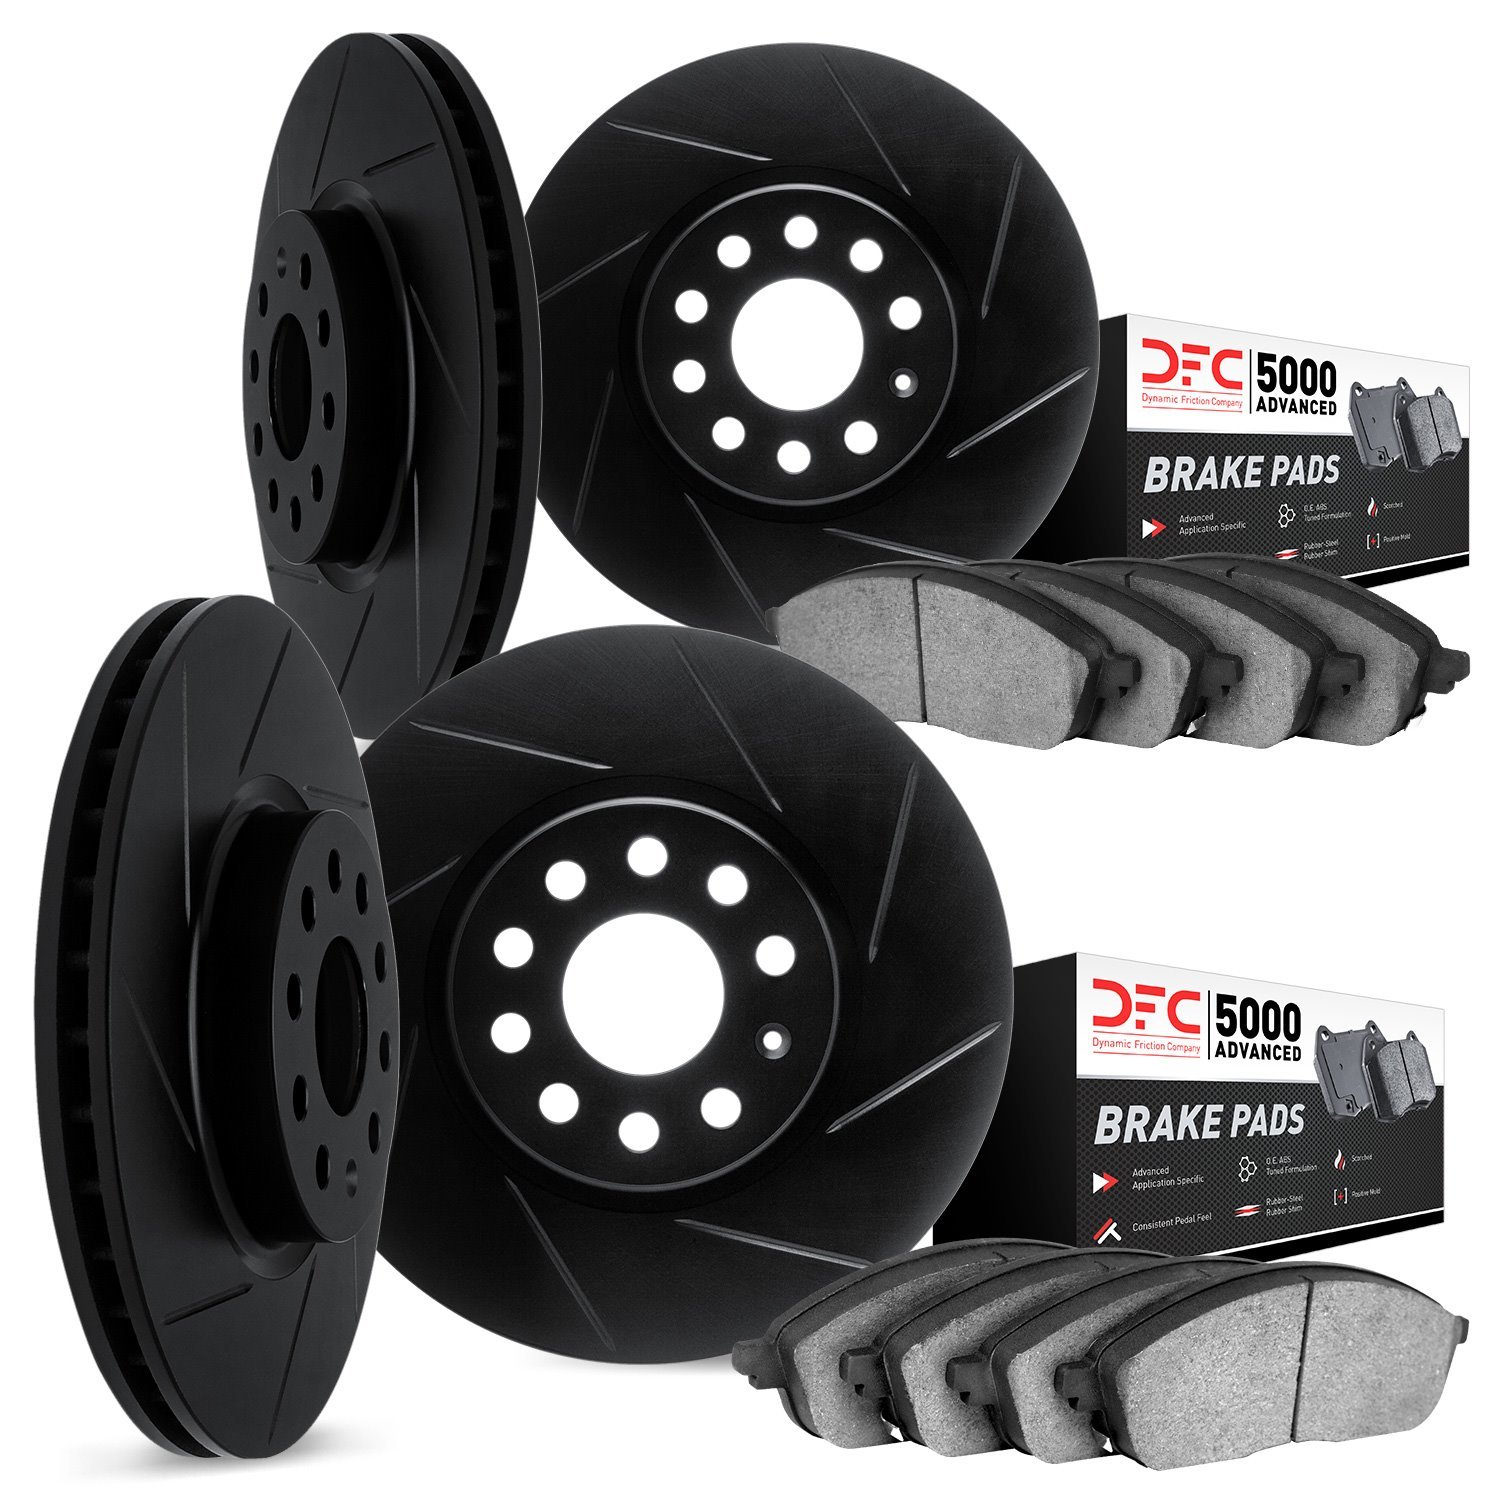 3514-42020 Slotted Brake Rotors w/5000 Advanced Brake Pads Kit & Hardware [Black], 2013-2021 Mopar, Position: Front and Rear